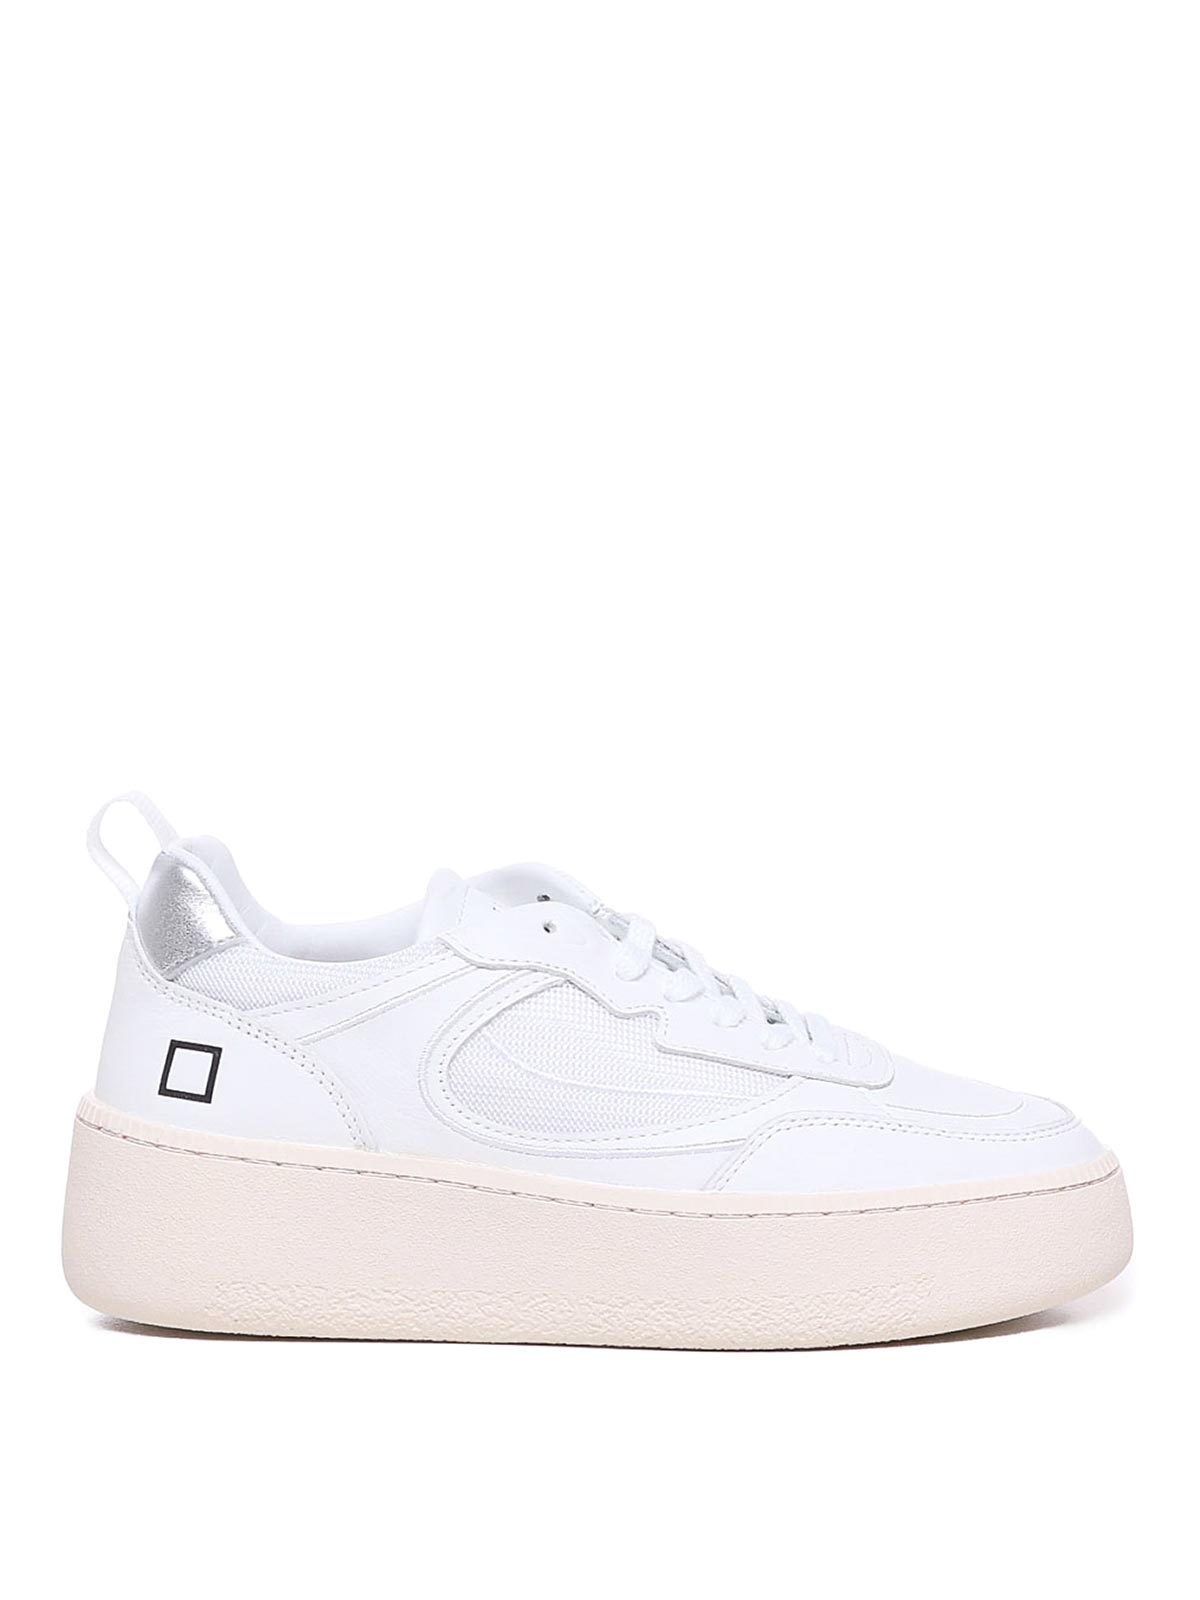 Shop Date Sfera Laminated Sneakers In White